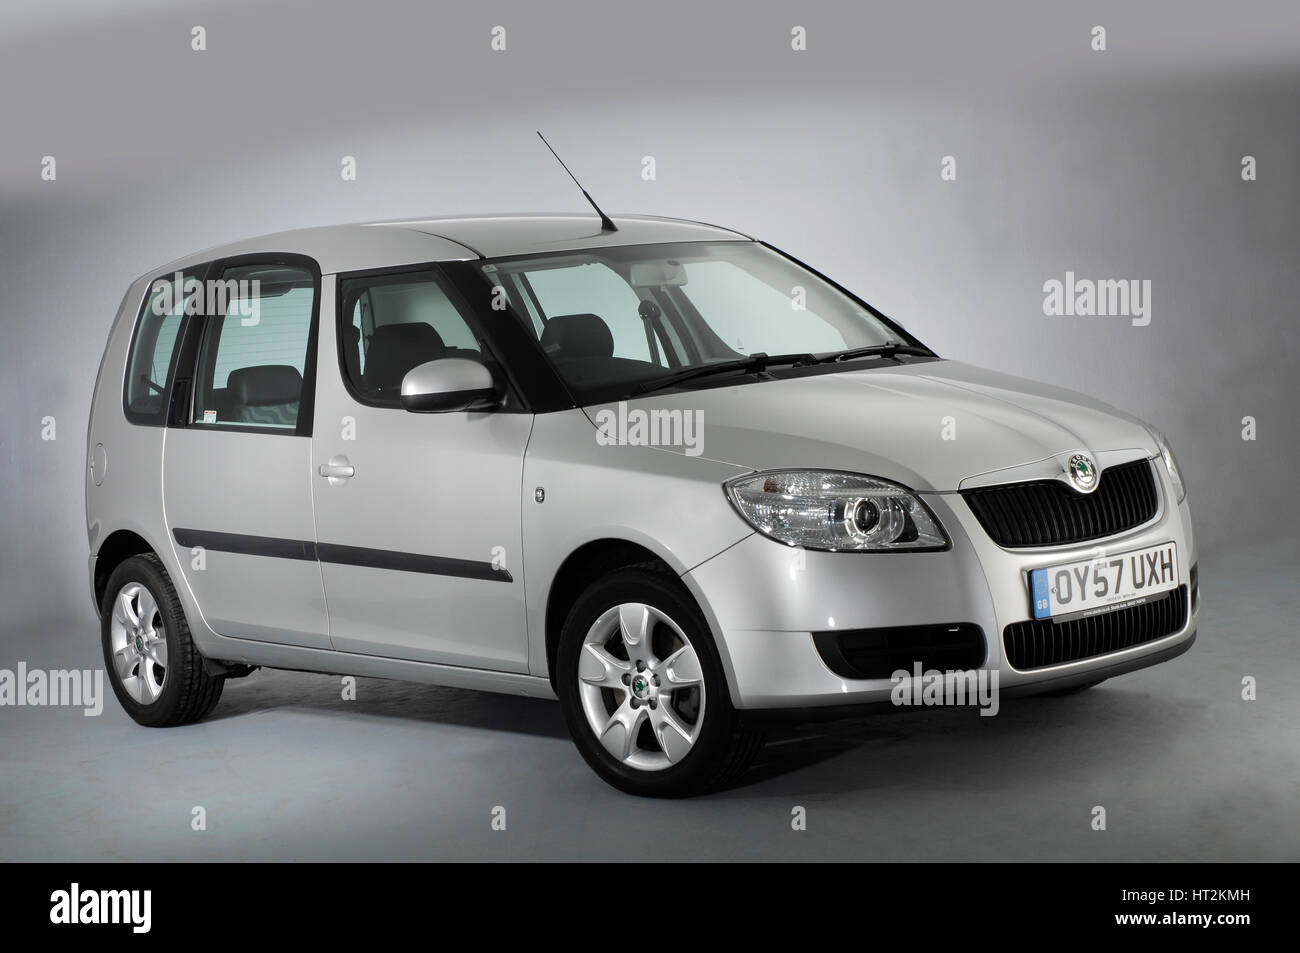 CelloMom on Cars: Review: 2013 Škoda Roomster